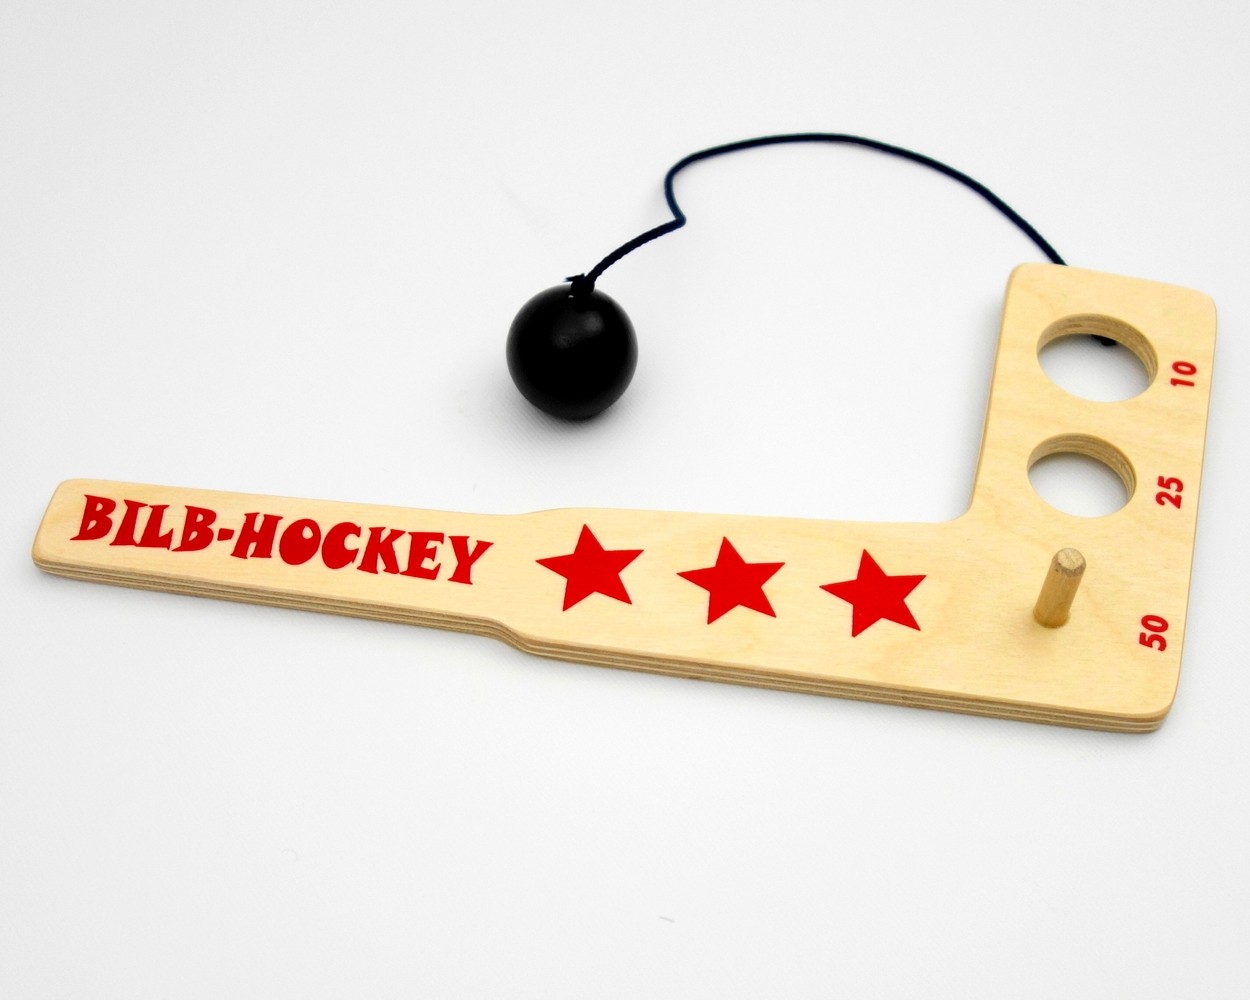 Bilb-Hockey